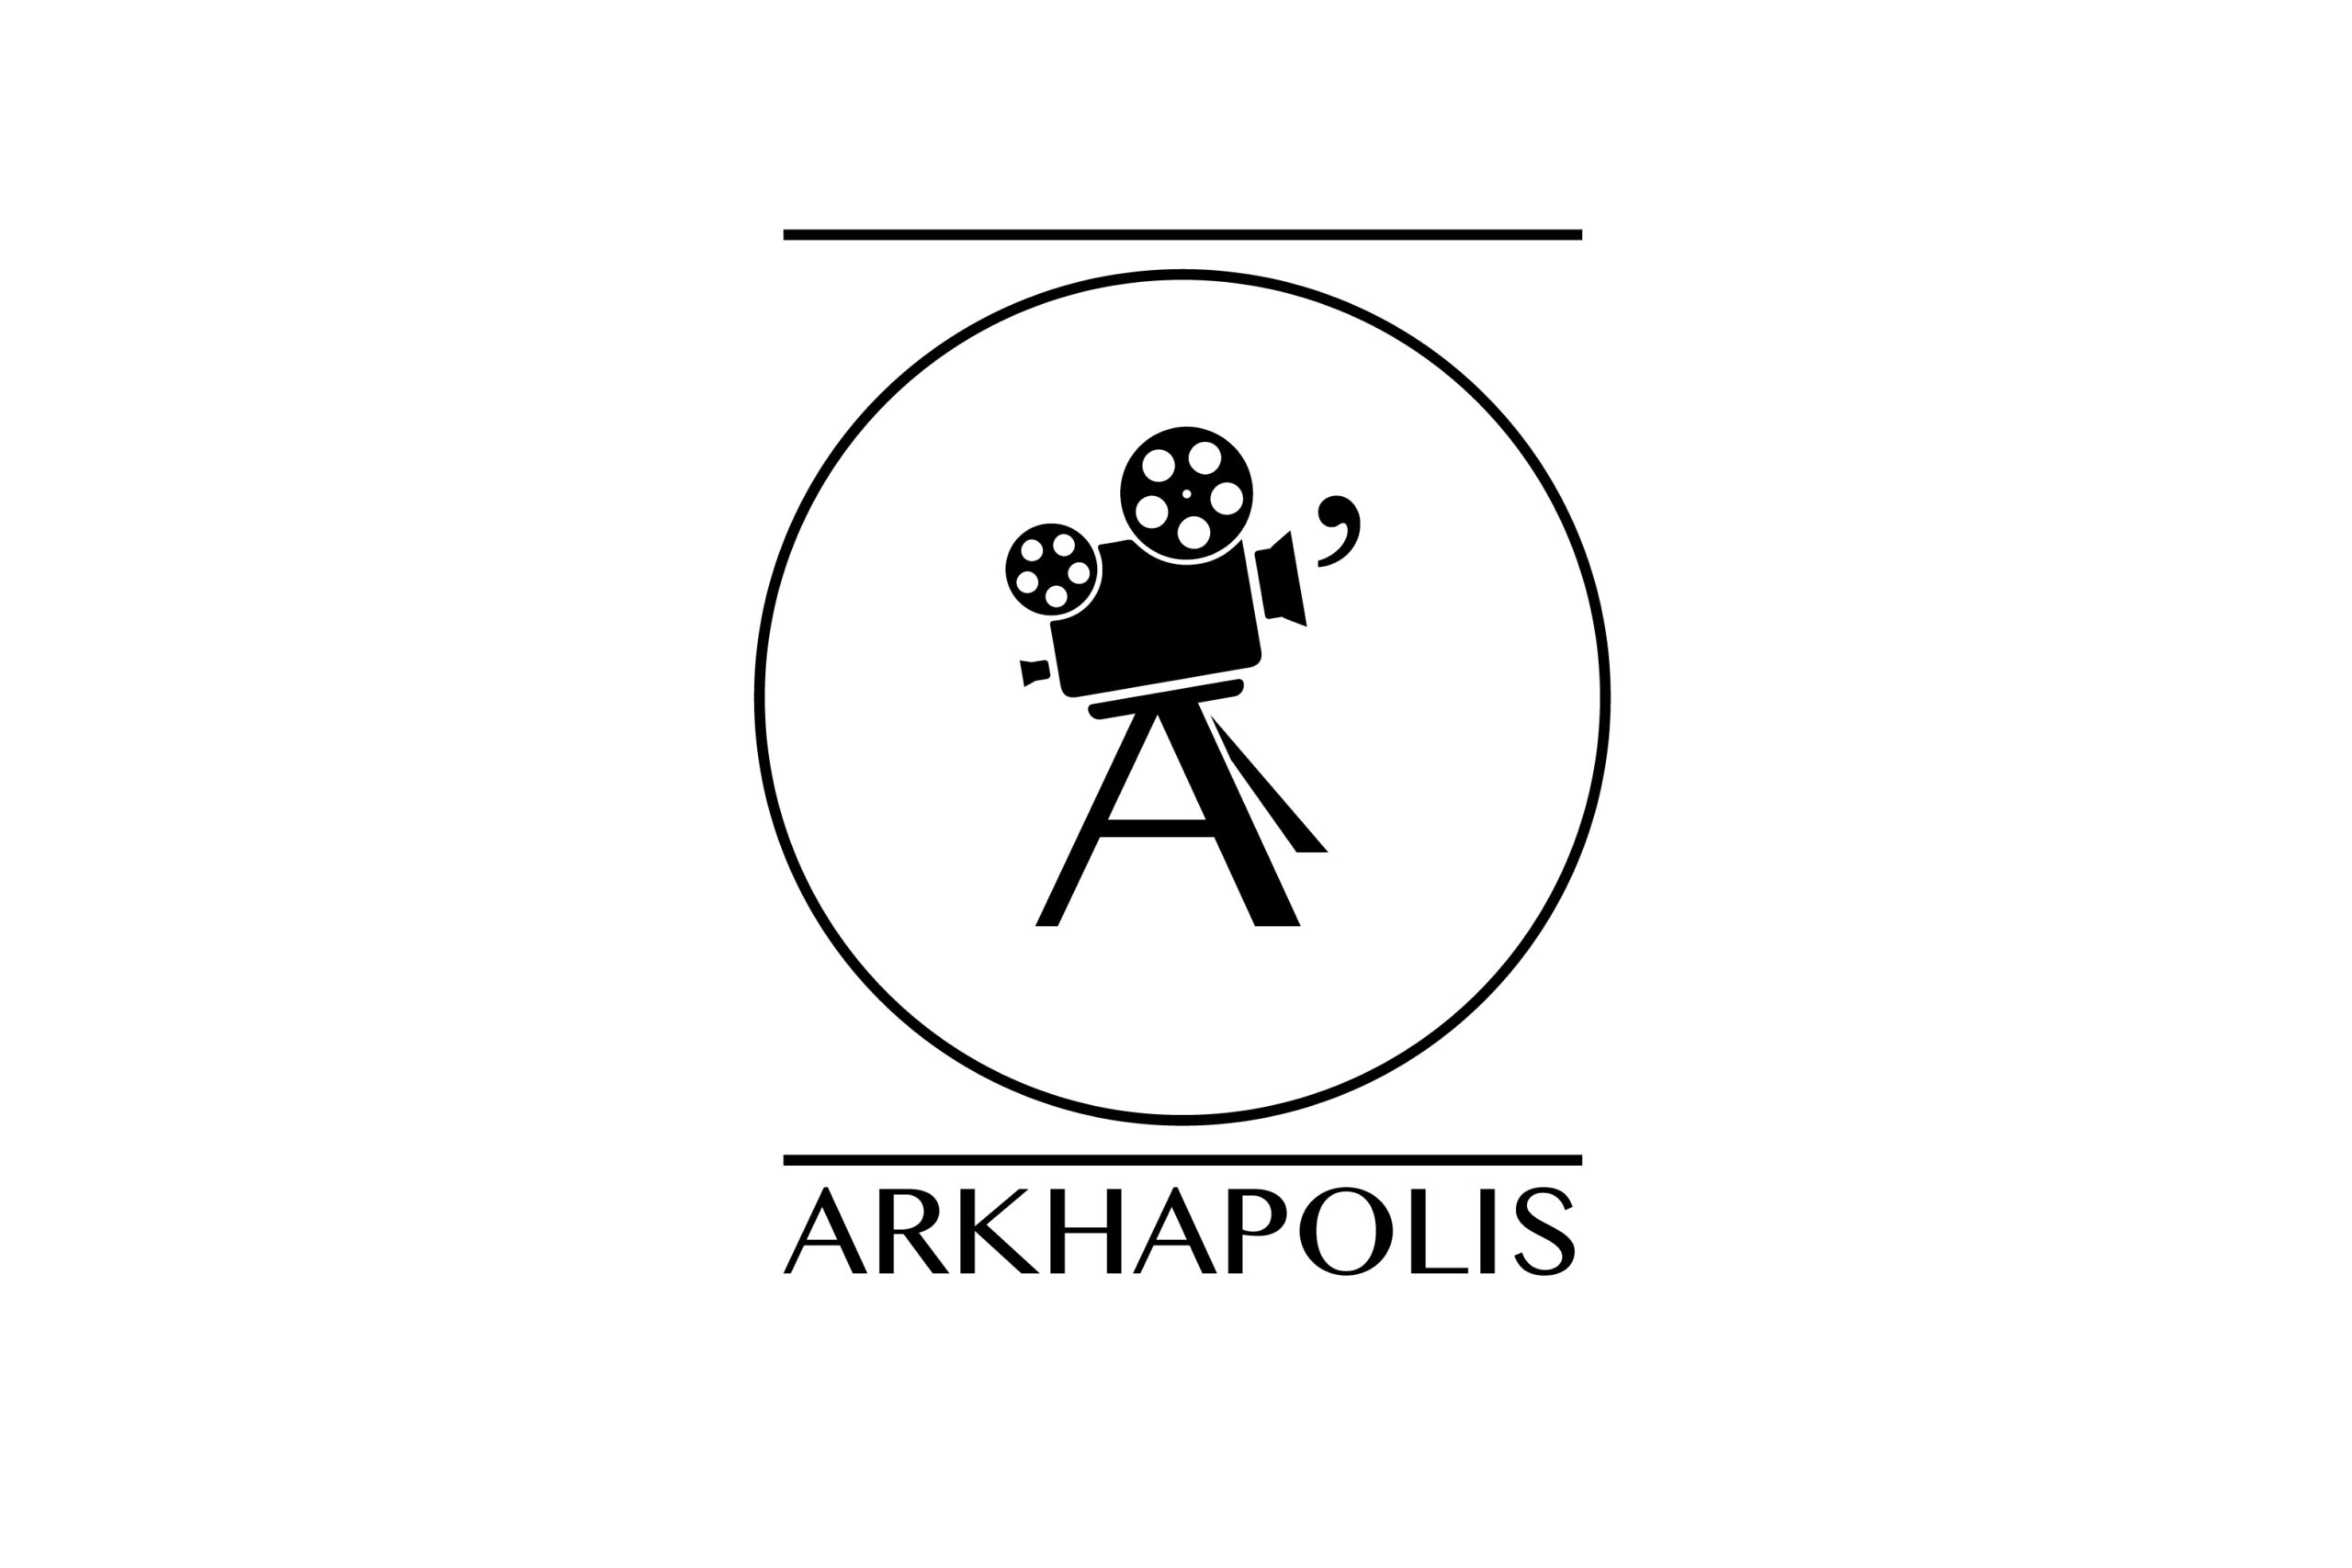 ARKHAPOLIS